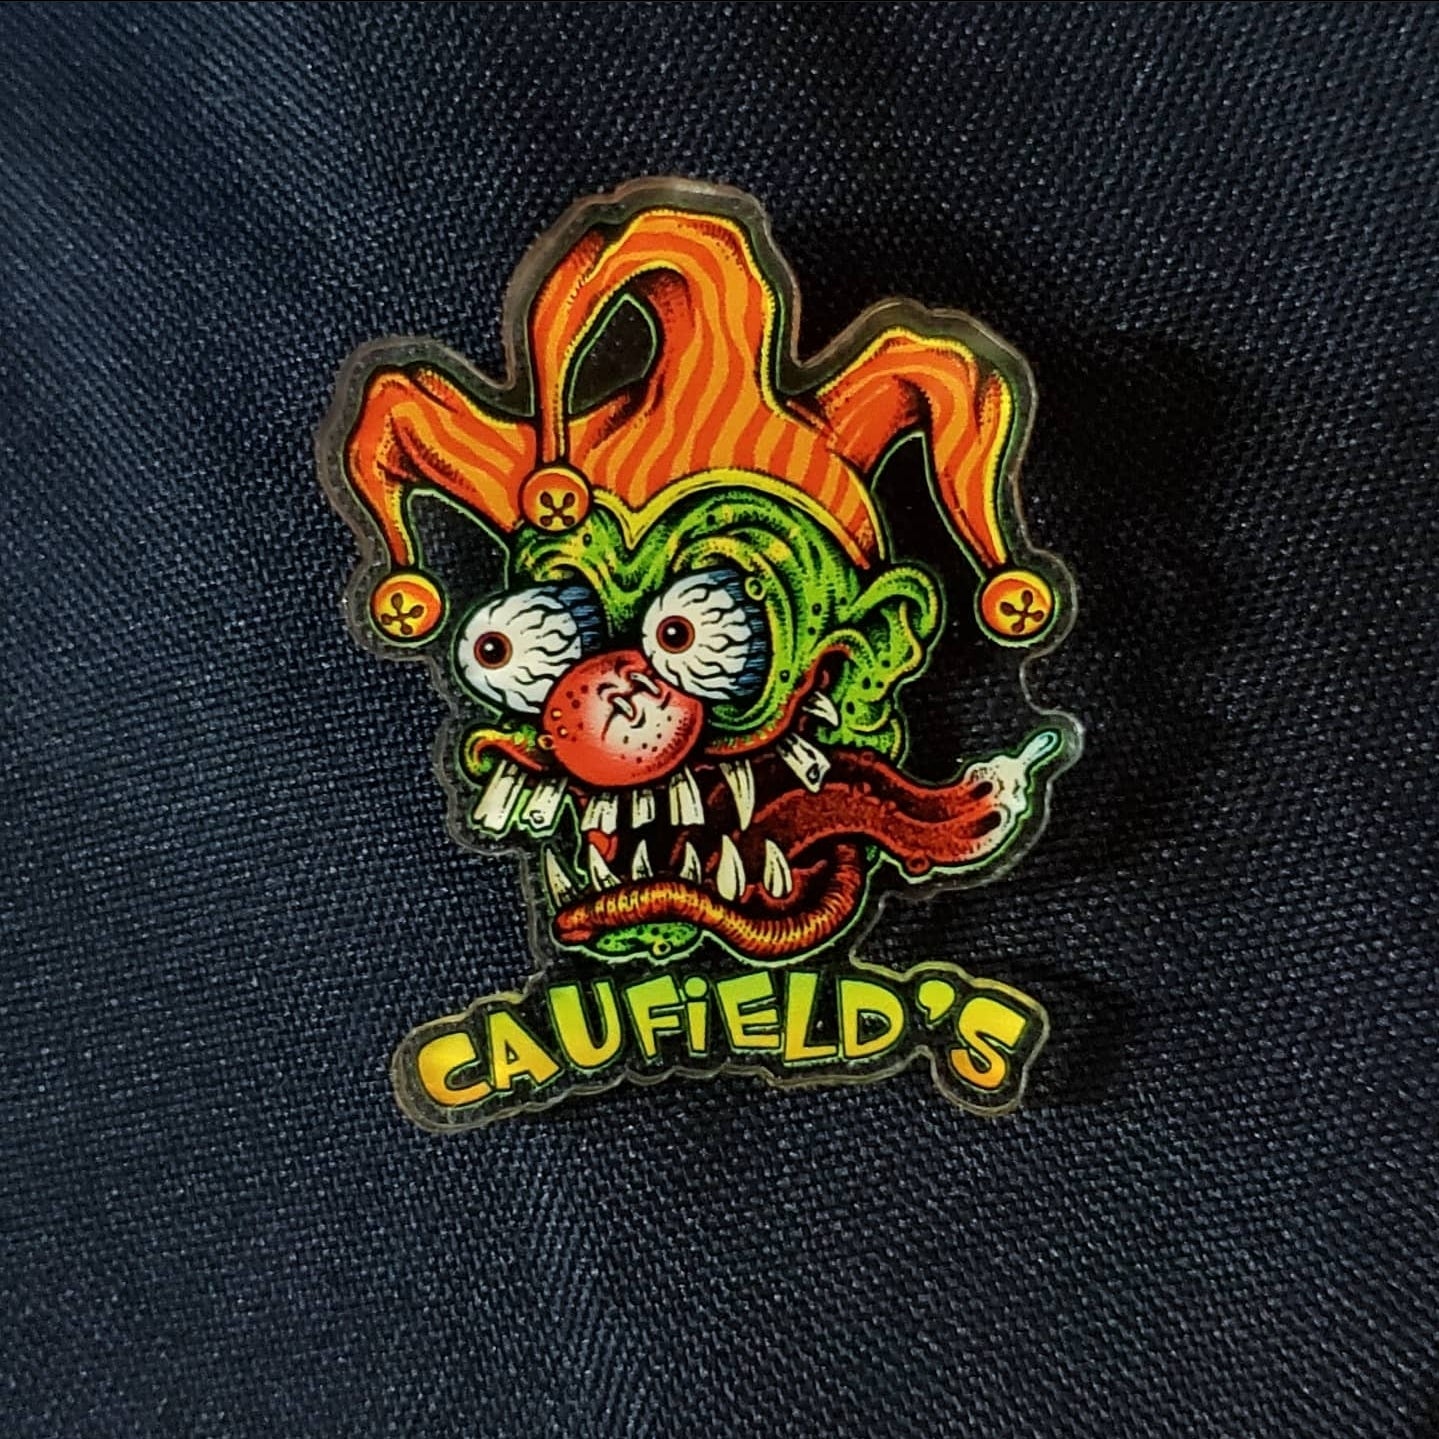 Caufield's Acrylic Jester Head Logo Pin